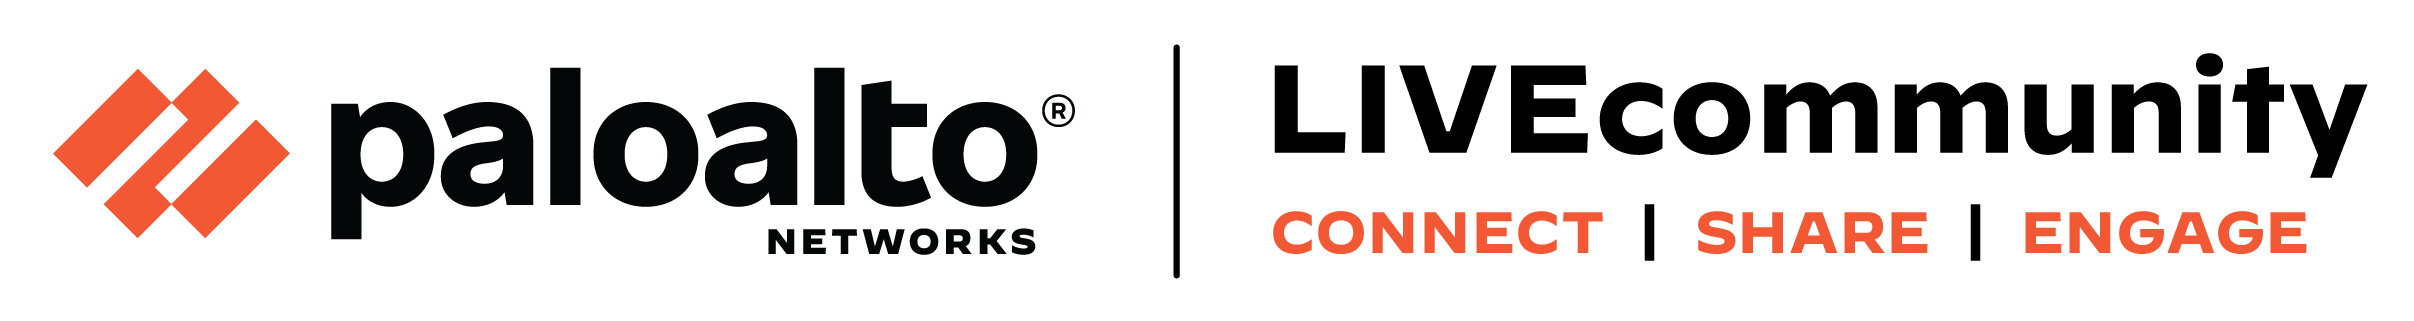 LIVEcommunity logo